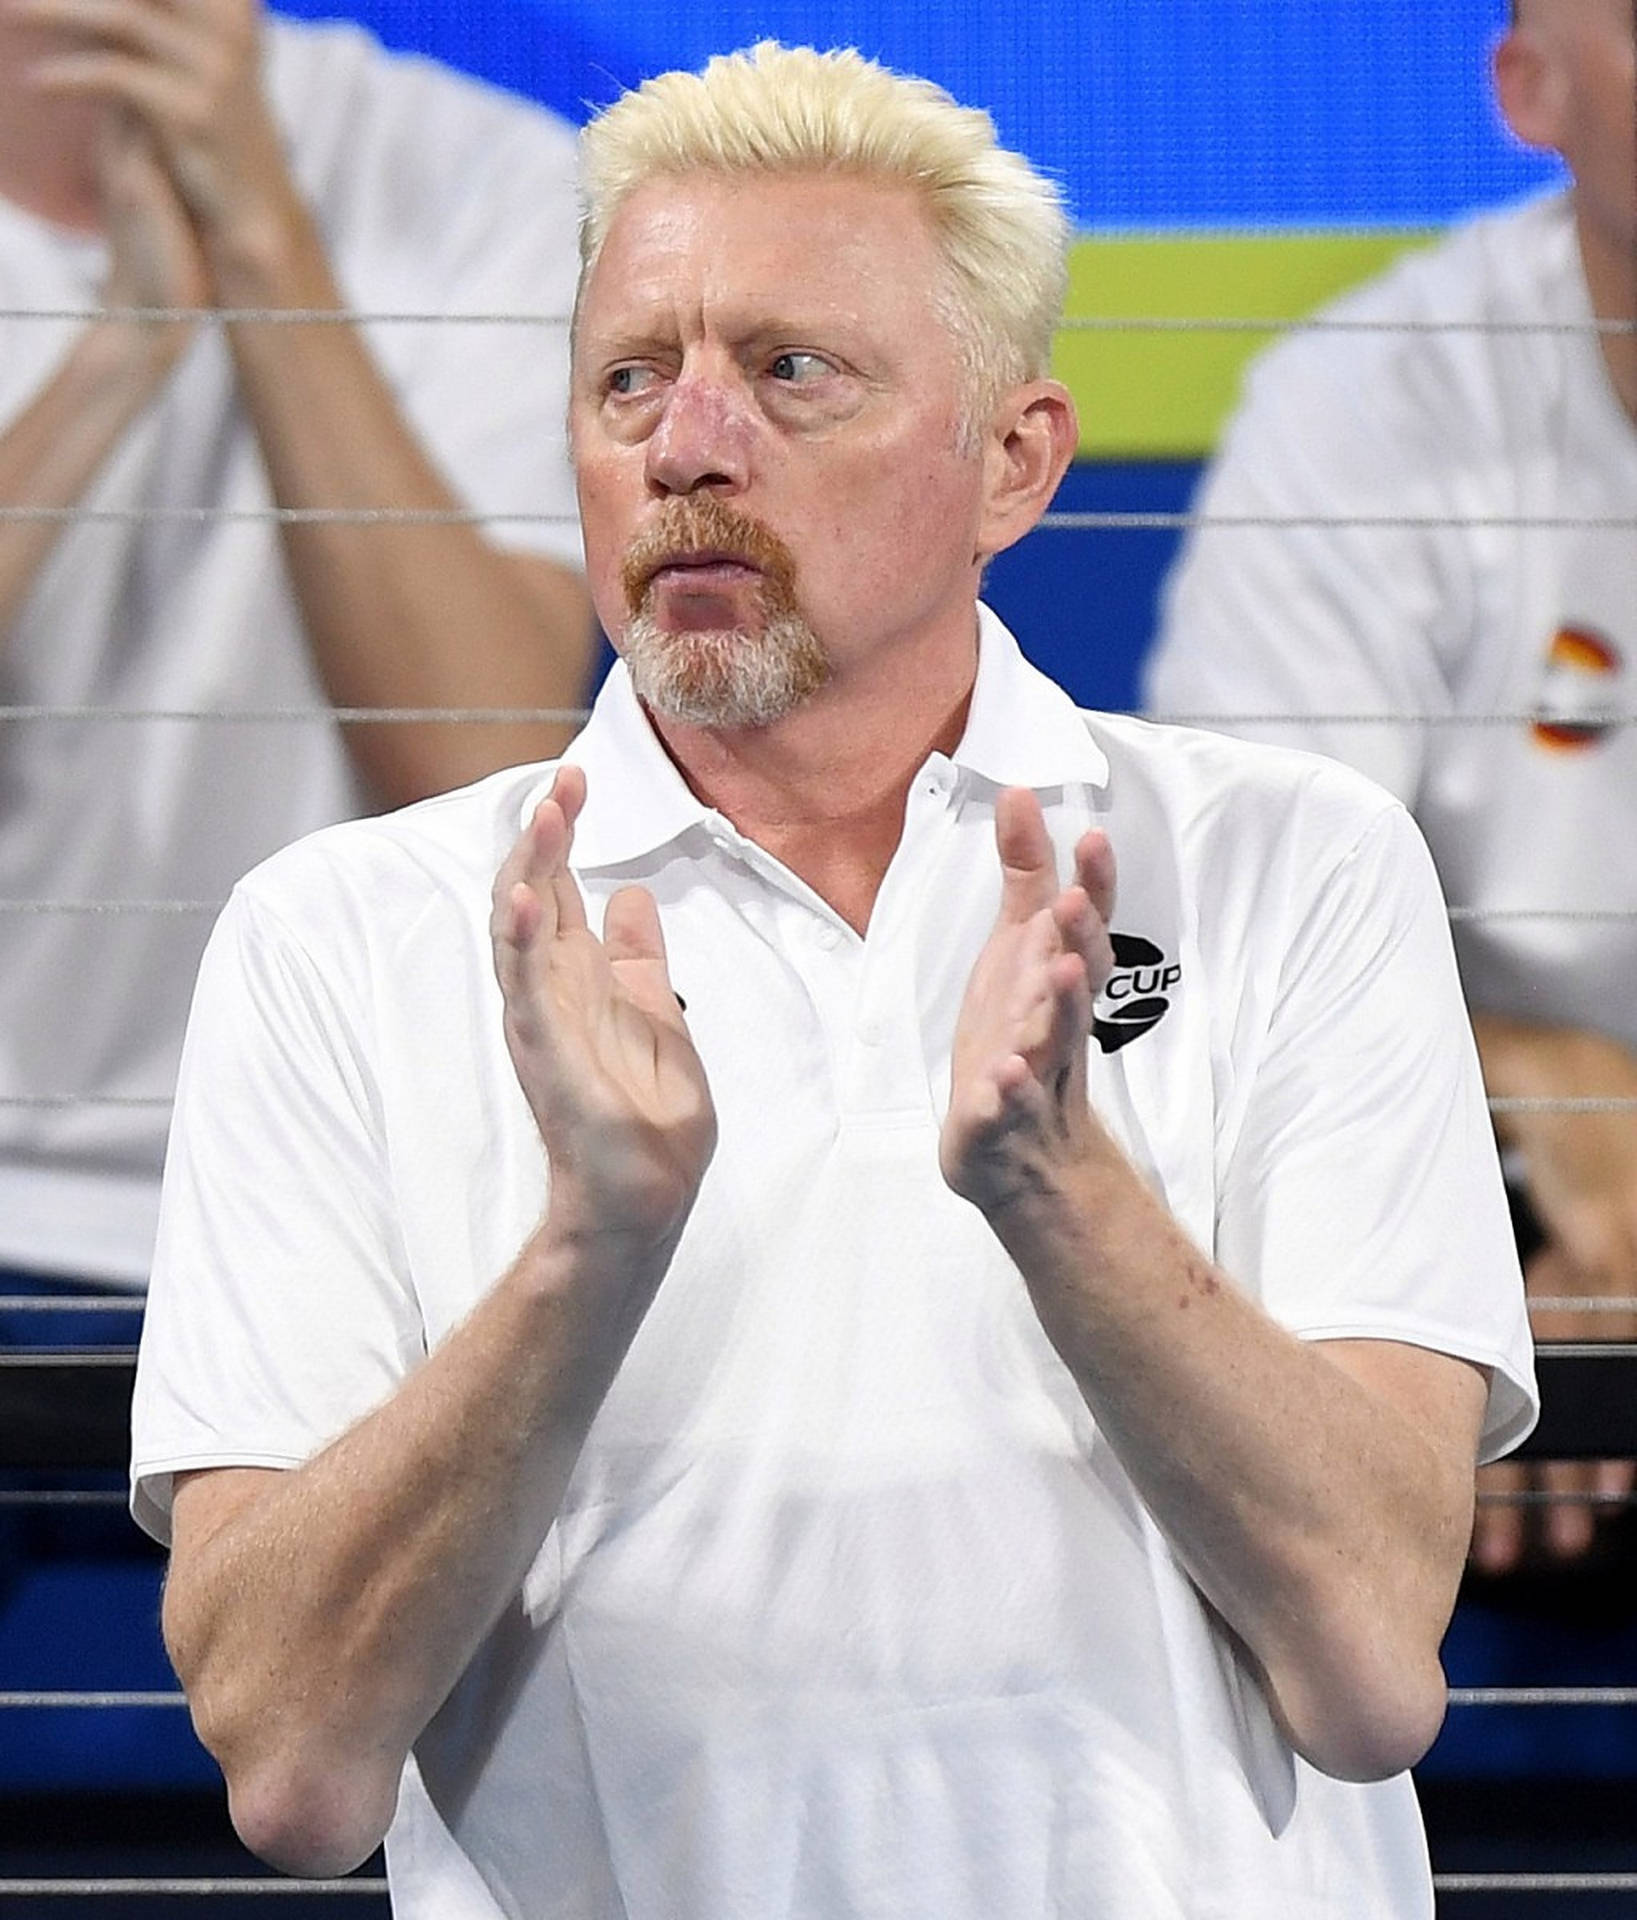 Cheering Boris Becker